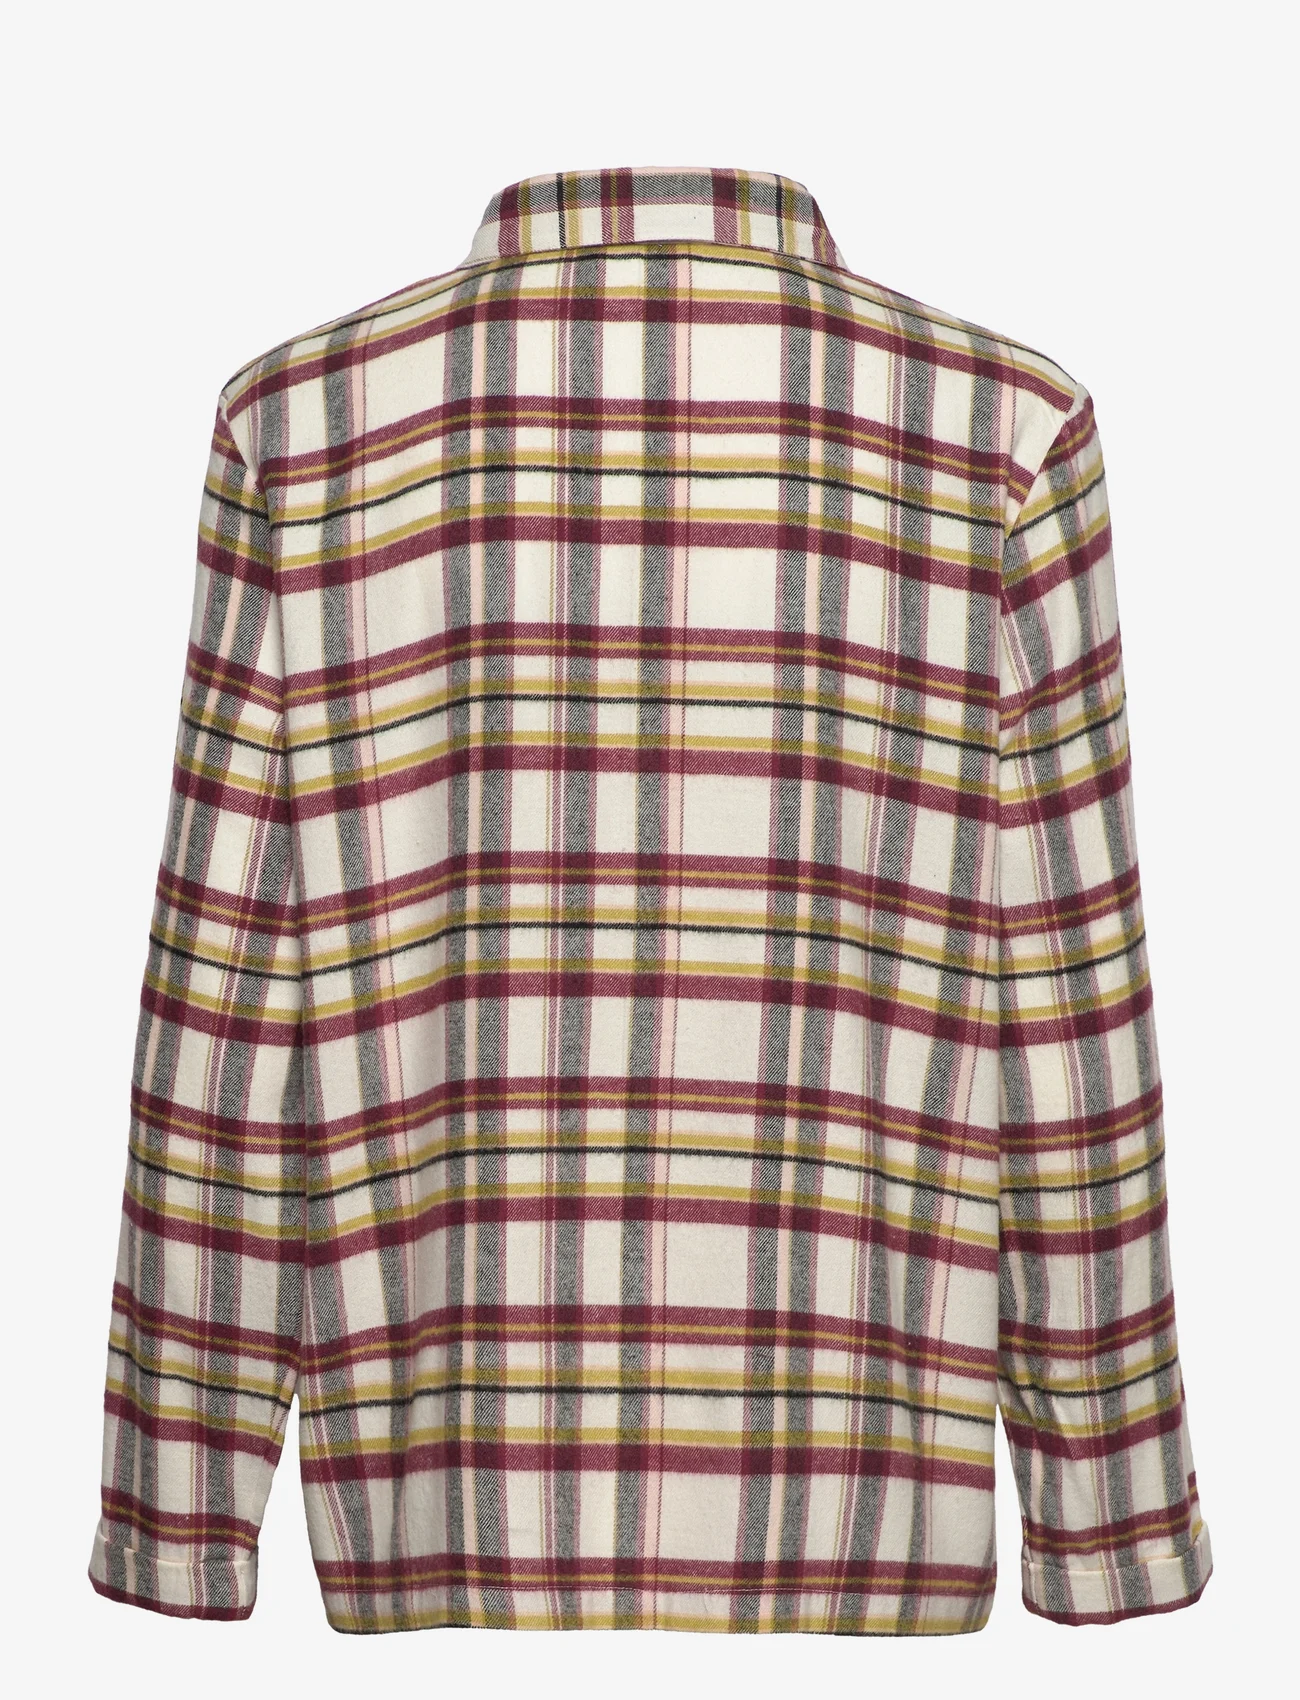 Passionata - Ortense Long Sleeve Shirt - najniższe ceny - print scottish - 1